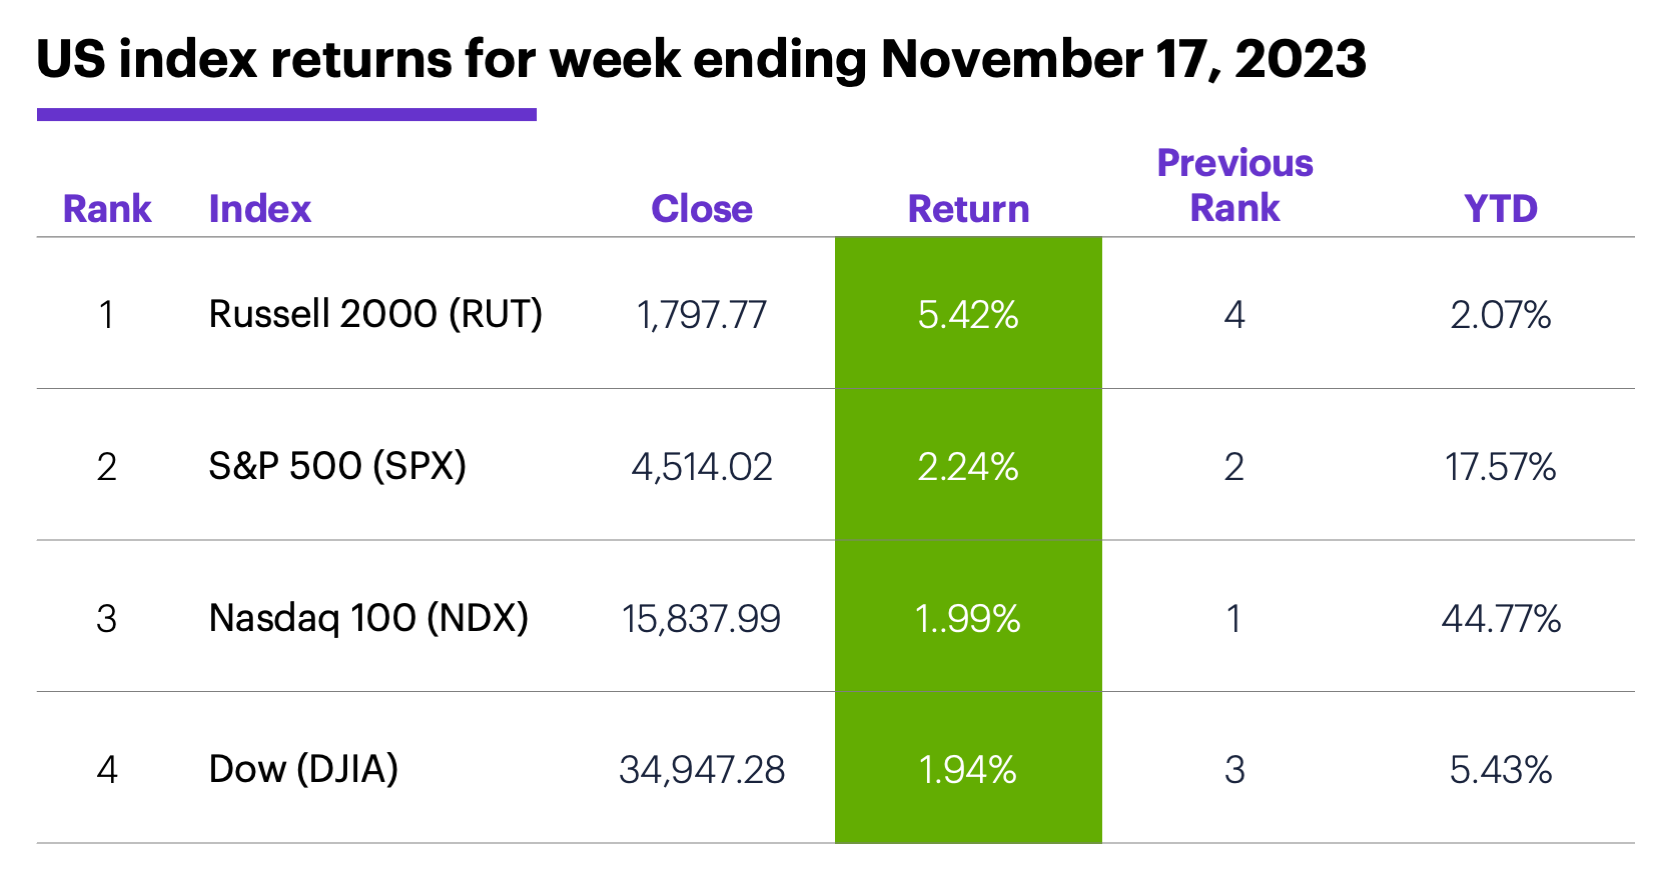 US stock index performance for week ending 11/17/23. S&P 500 (SPX), Nasdaq 100 (NDX), Russell 2000 (RUT), Dow Jones Industrial Average (DJIA).